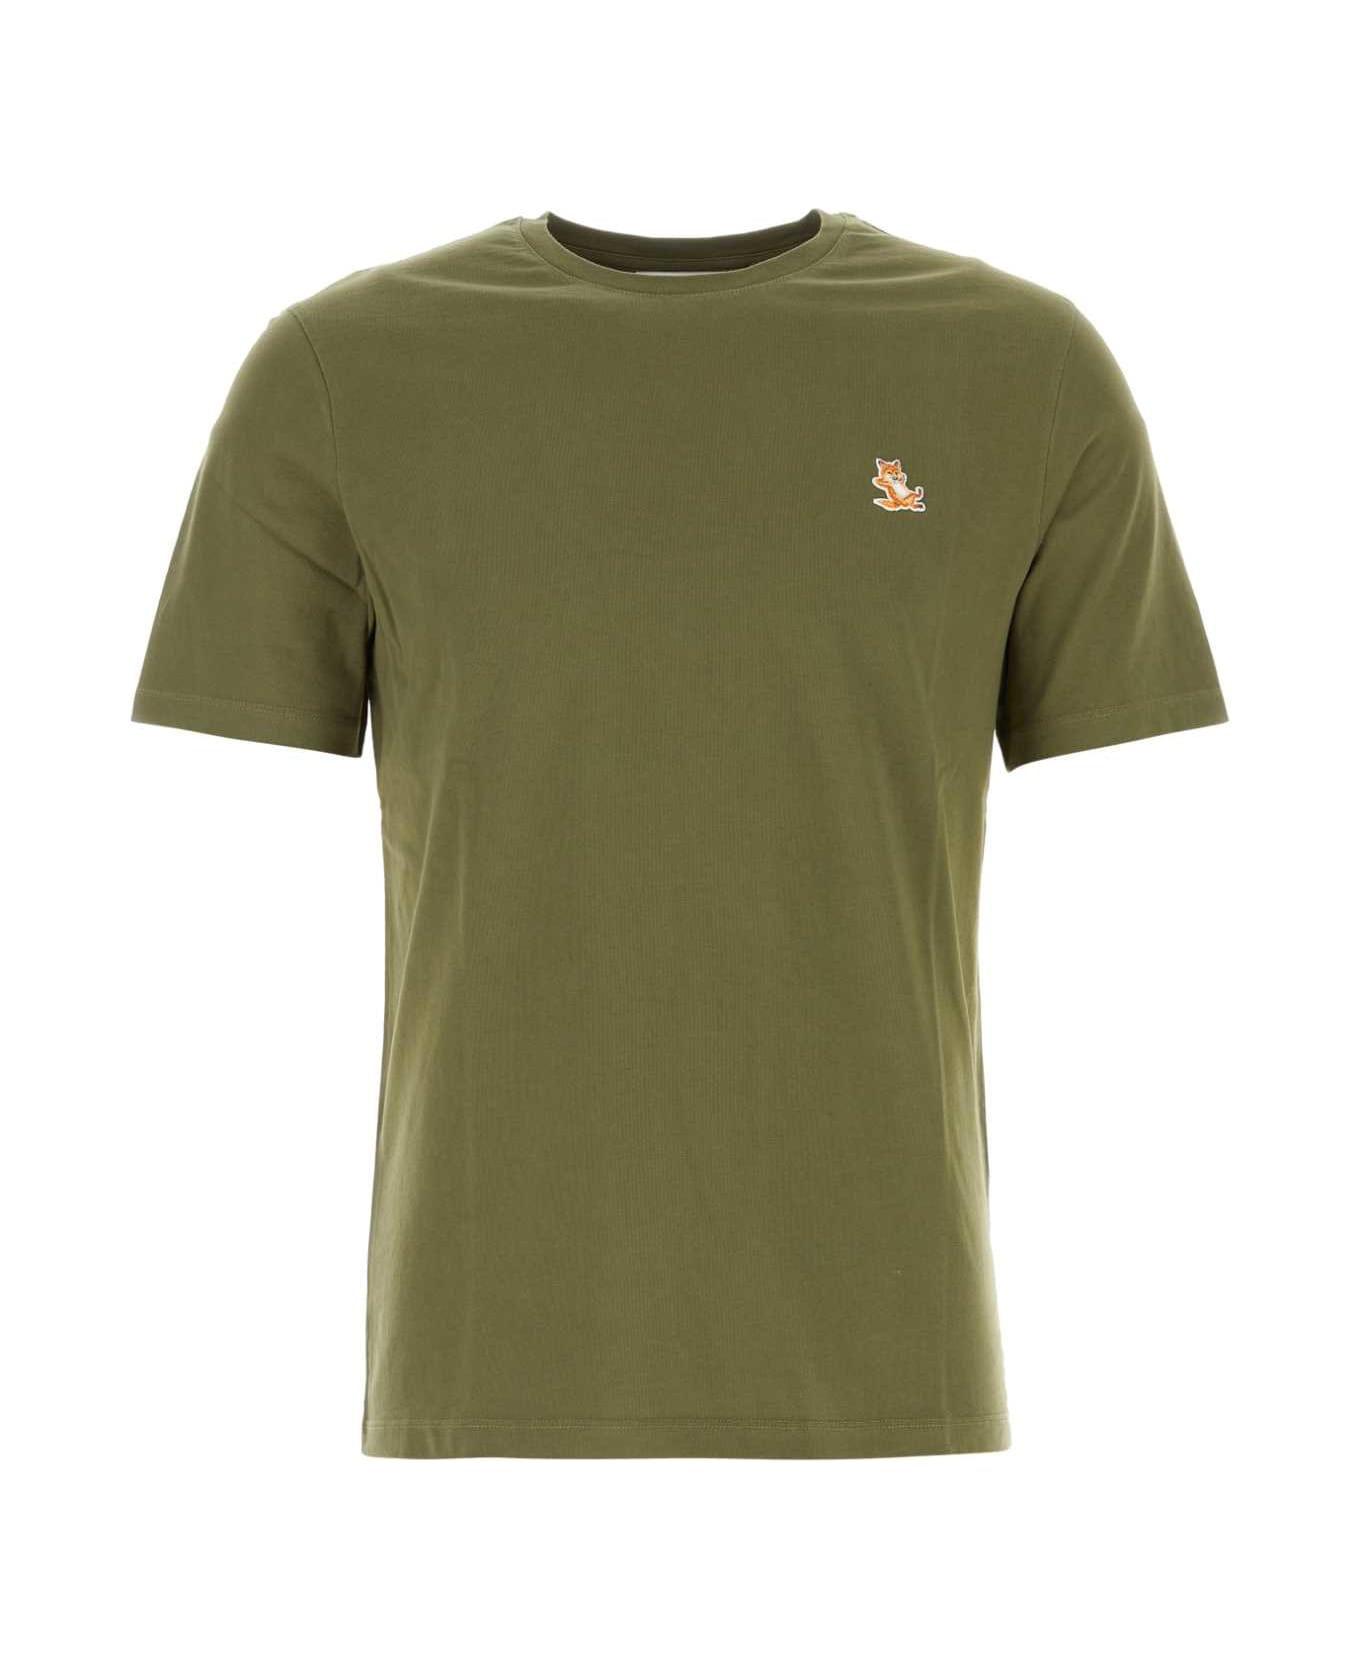 Maison Kitsuné Army Green Cotton T-shirt - MILITARYGREEN